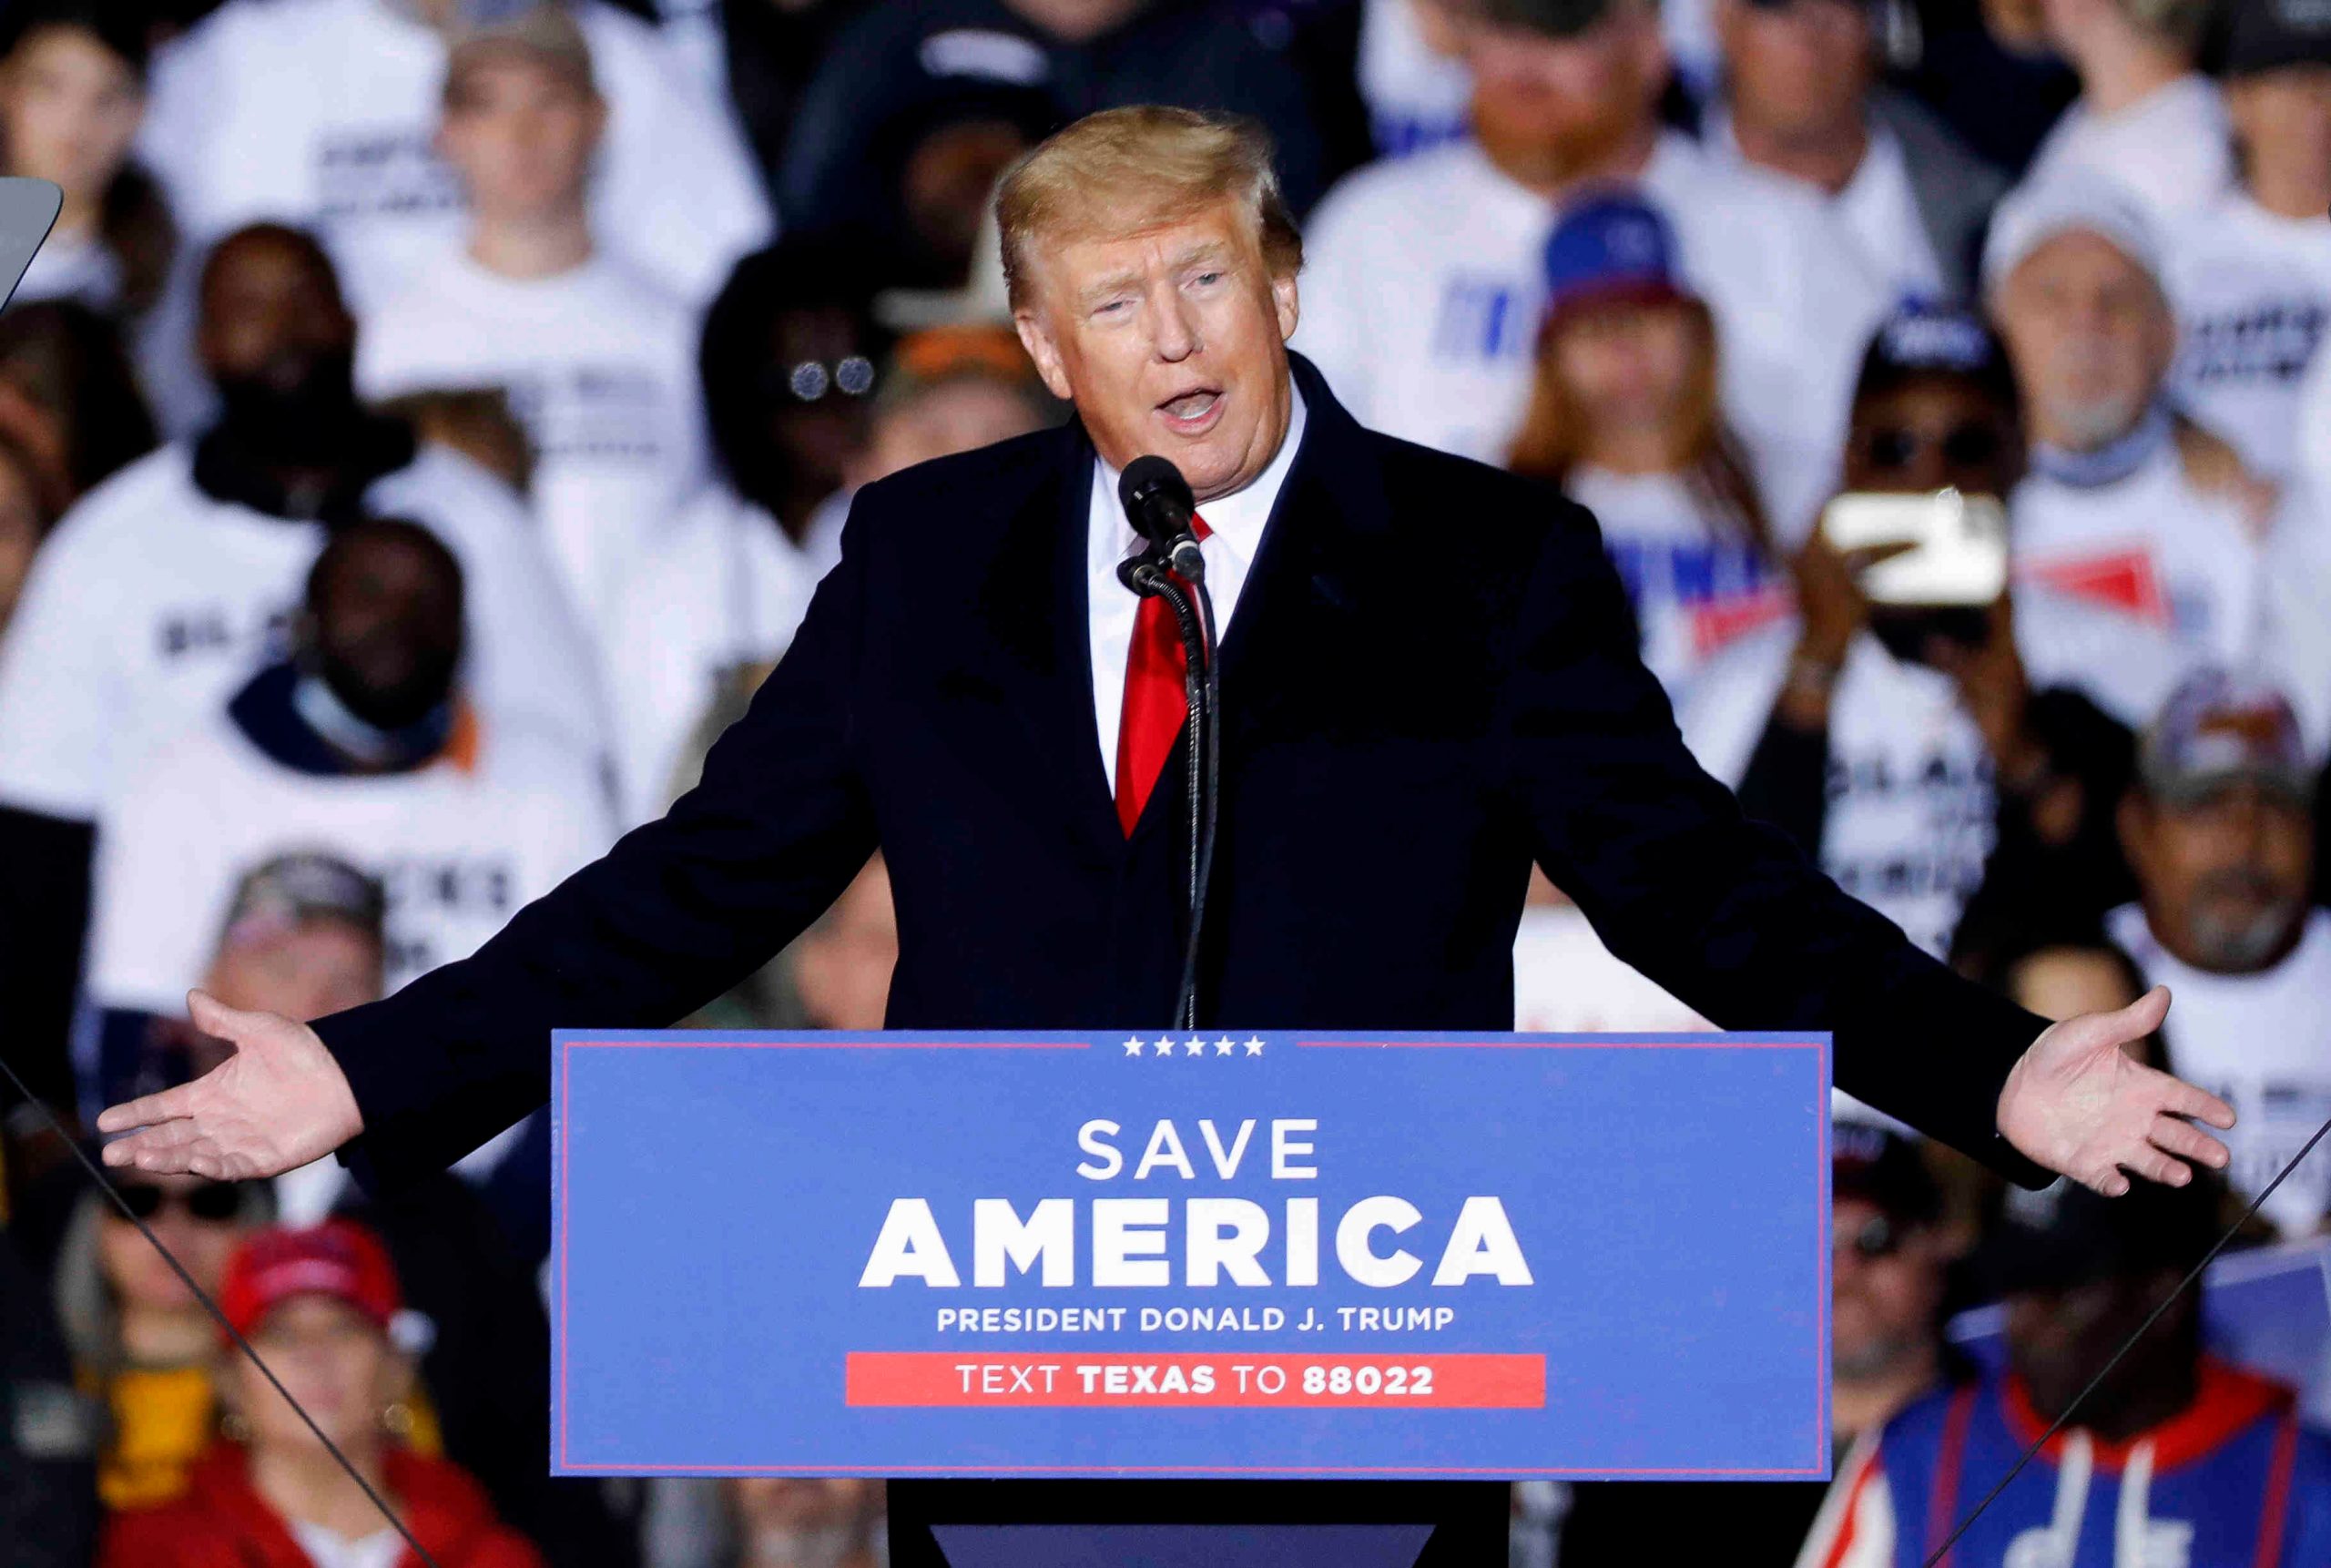 Donald Trump at North Carolina rally: I’m the most honest human being